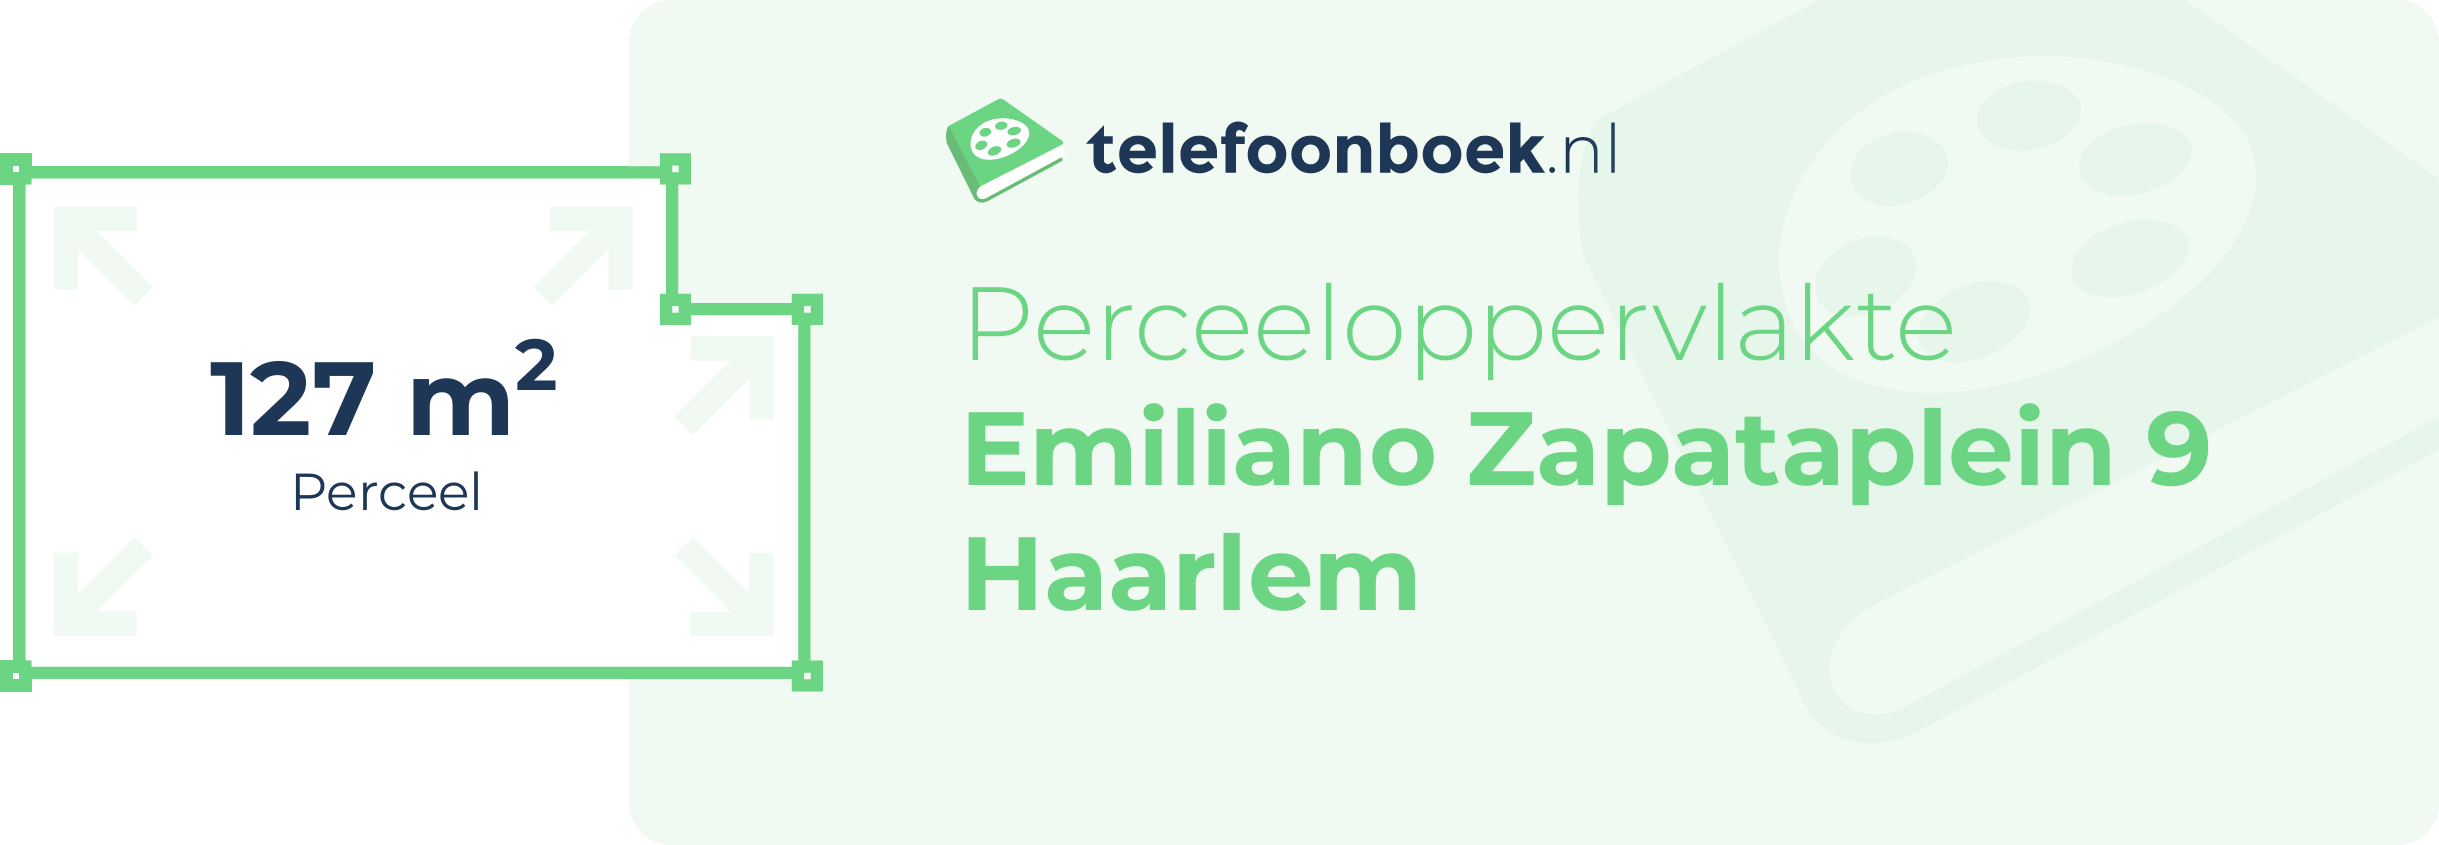 Perceeloppervlakte Emiliano Zapataplein 9 Haarlem